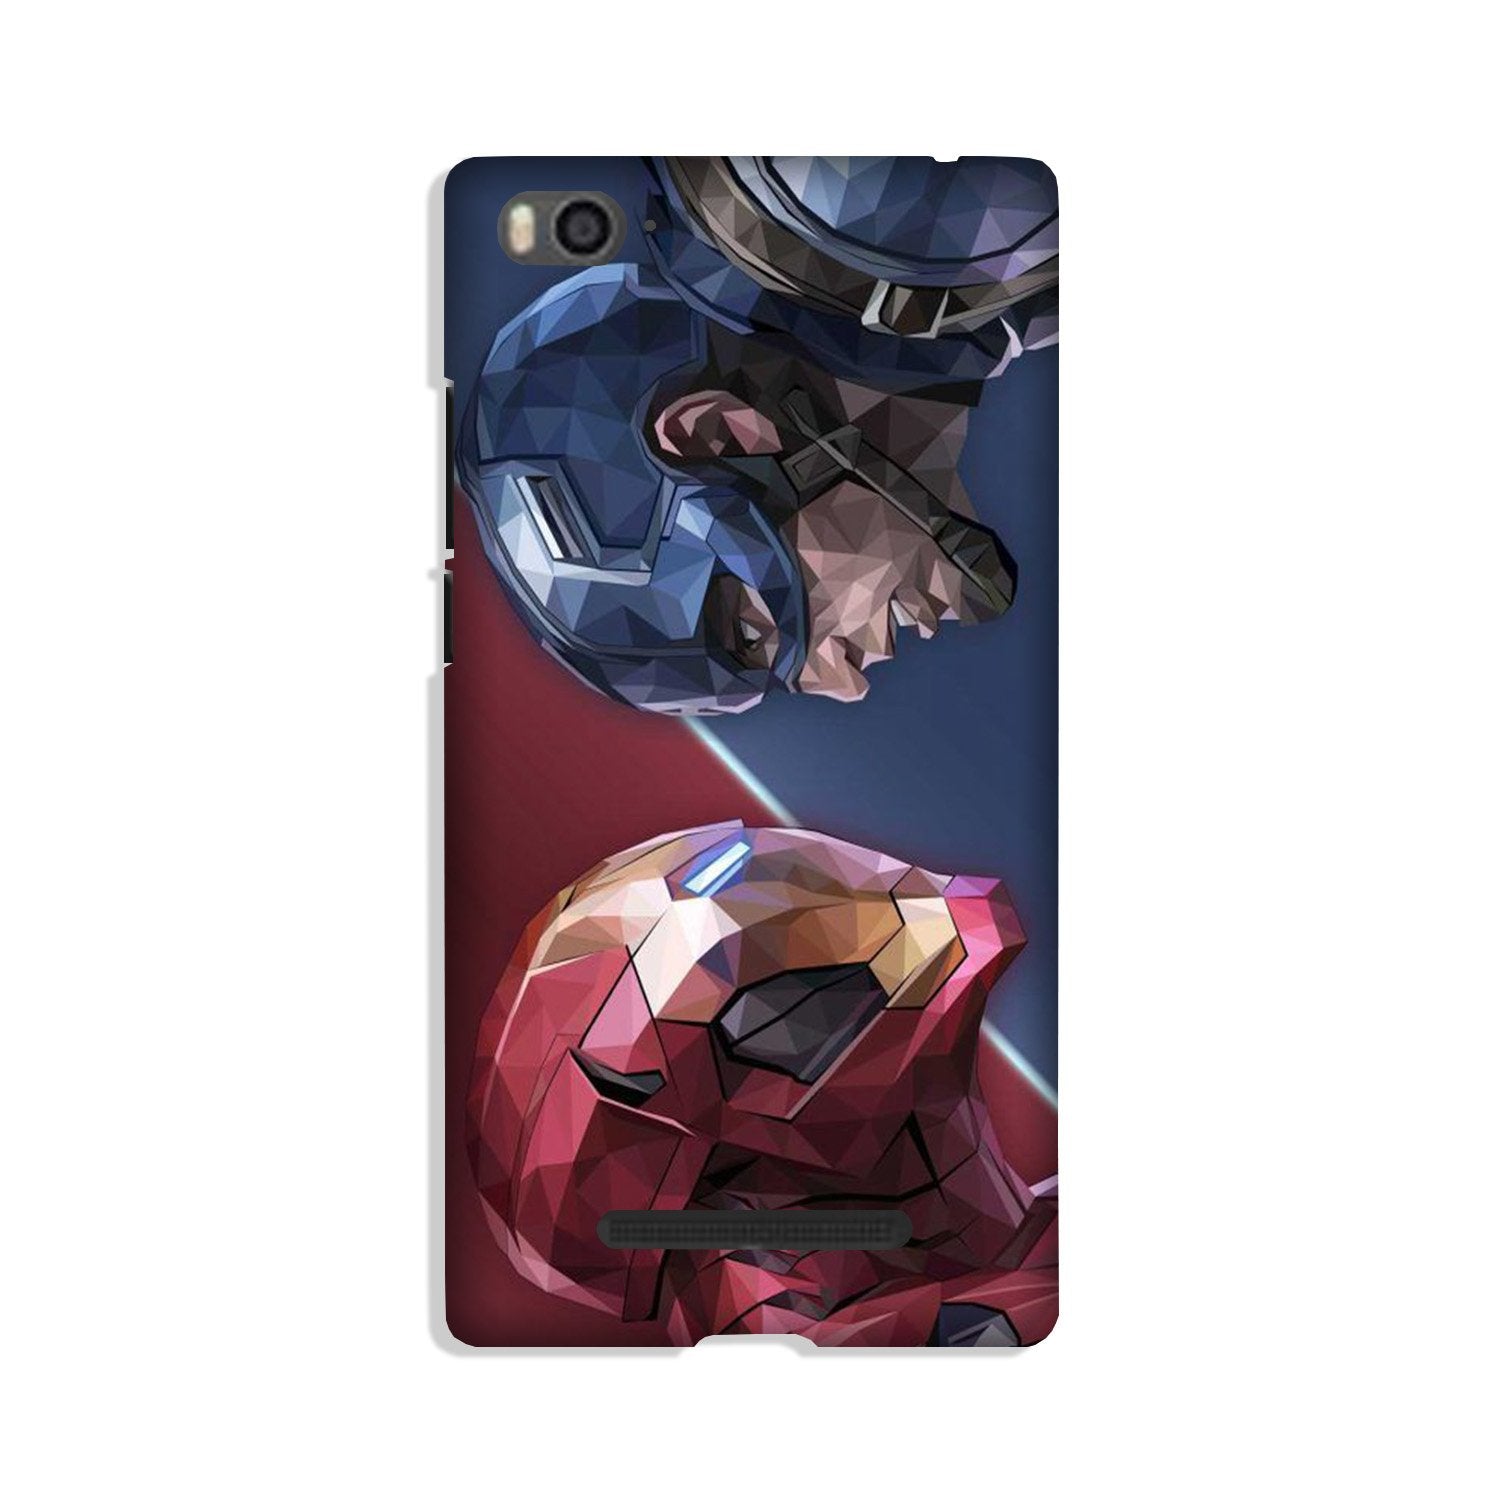 Ironman Captain America Case for Xiaomi Redmi 5A (Design No. 245)